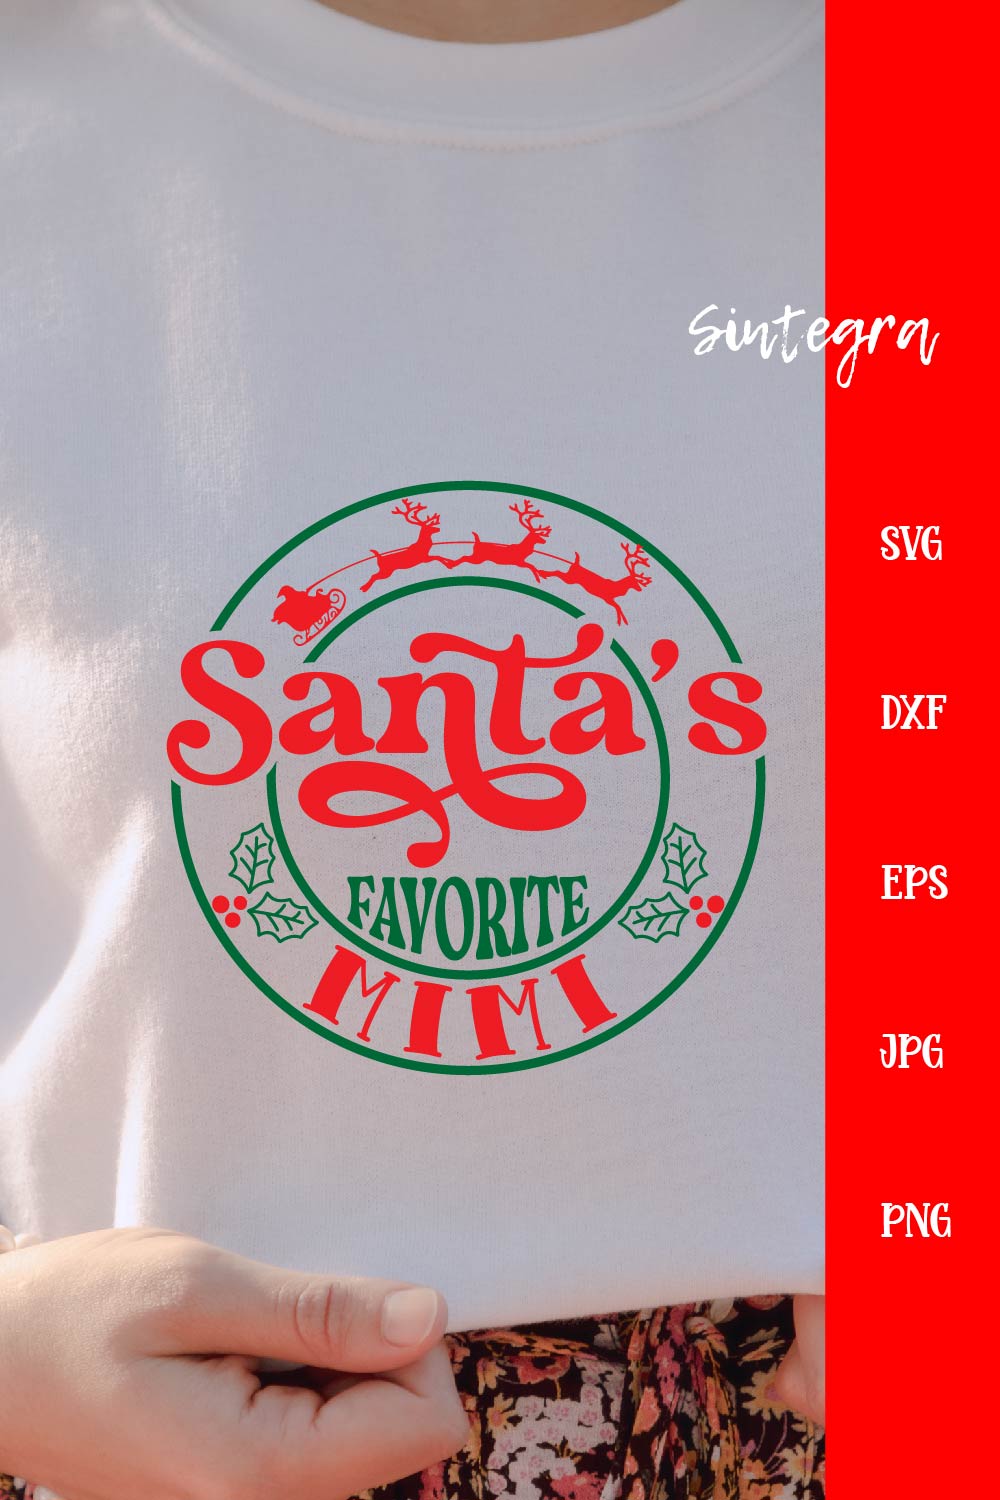 Santa's Favorite Mimi SVG - pinterest image preview.